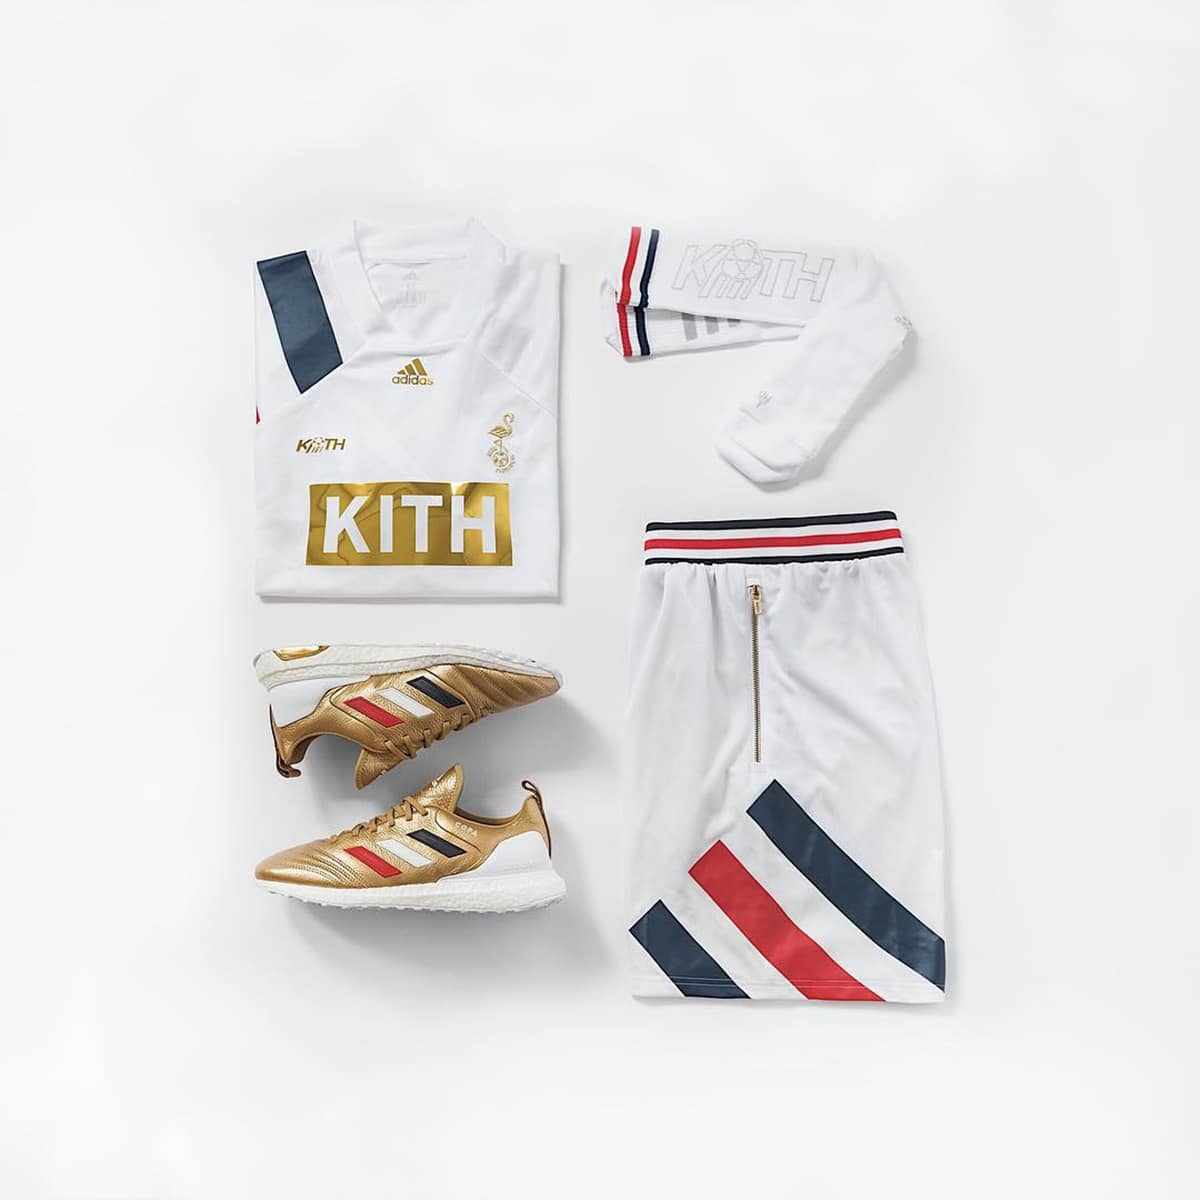 KITH x adidas Football 2018 Collection - 3